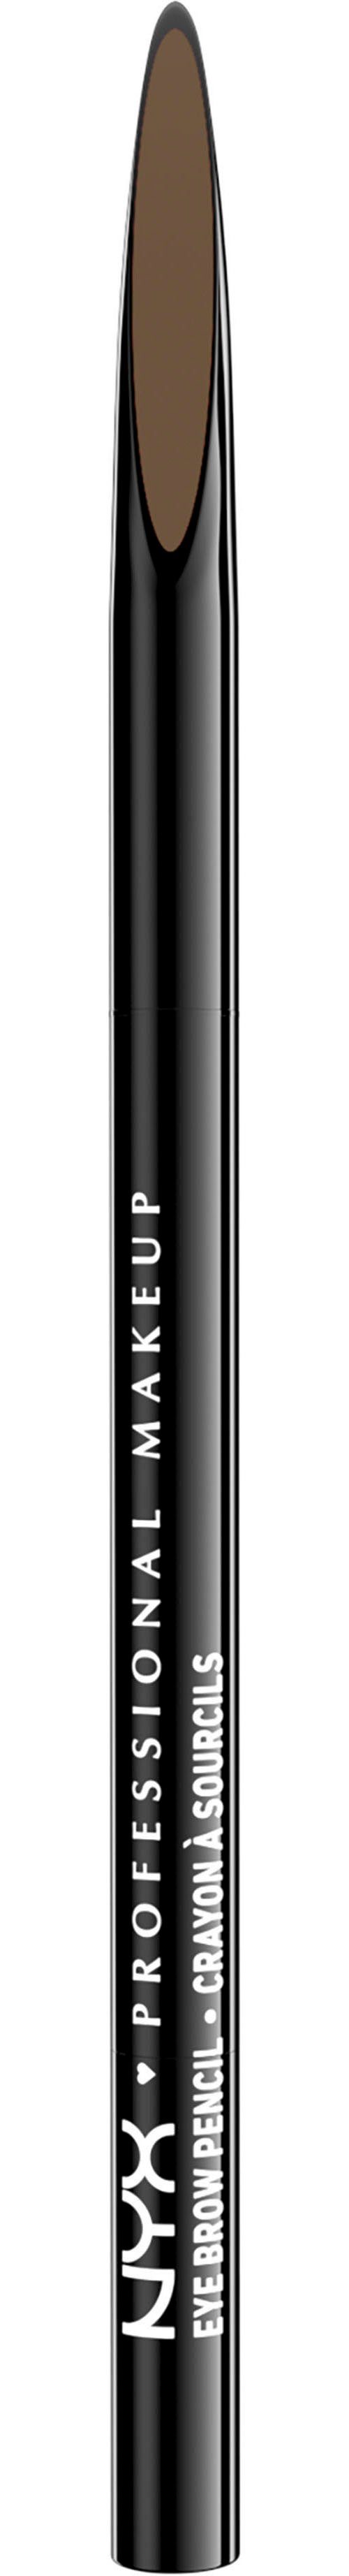 NYX Augenbrauen-Stift Professional Makeup Precision Brow Pencil taupe | Augenbrauen